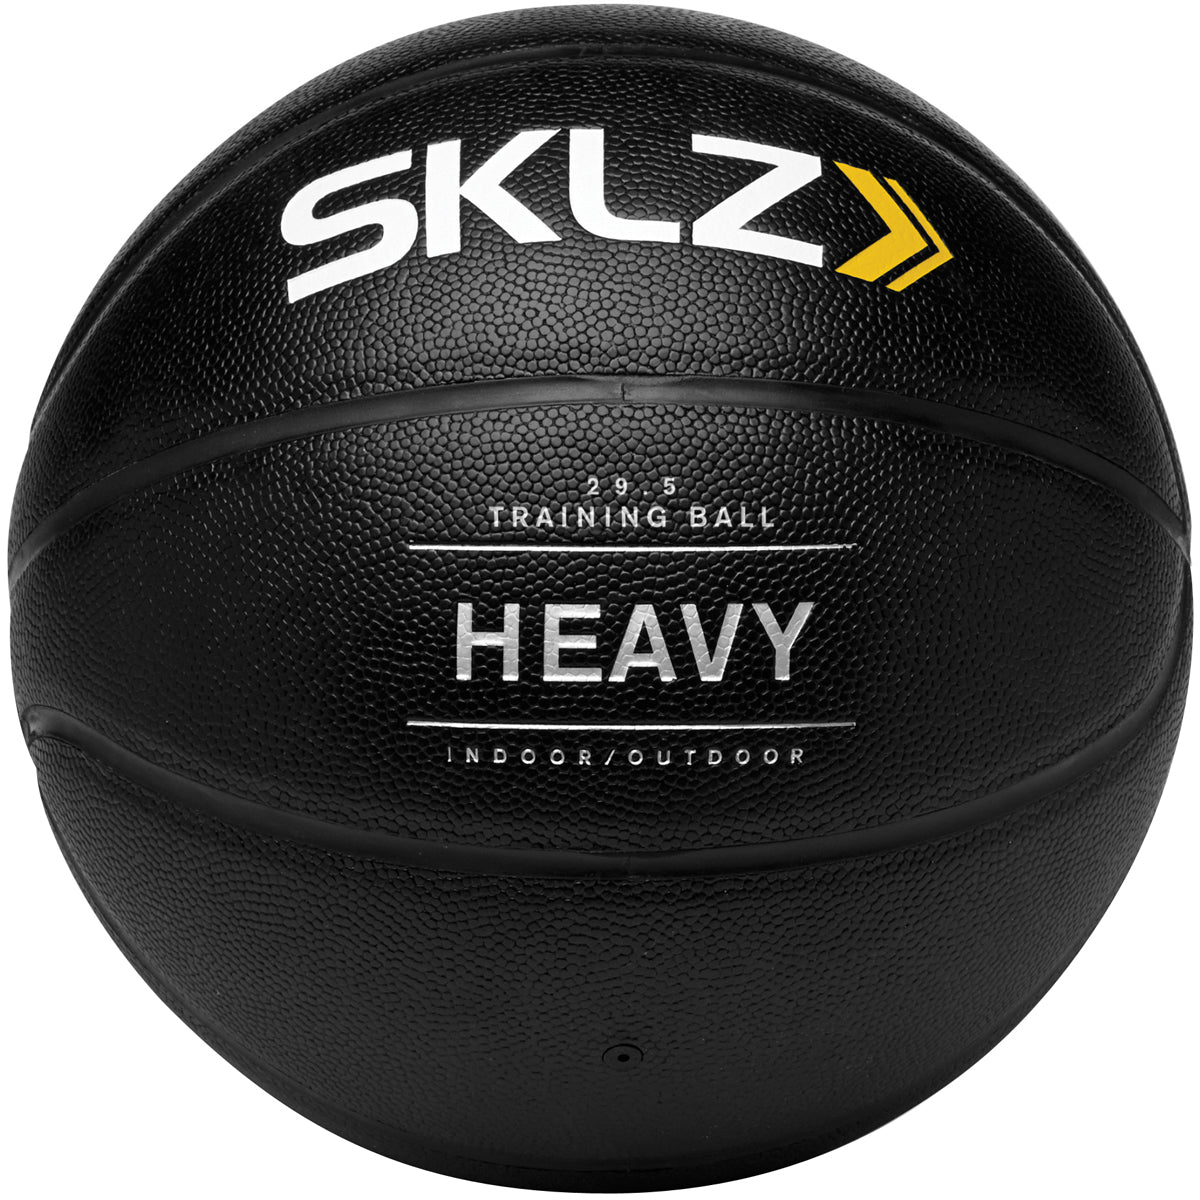 SKLZ Heavy Weight Control Training Basketball - Black SKLZ